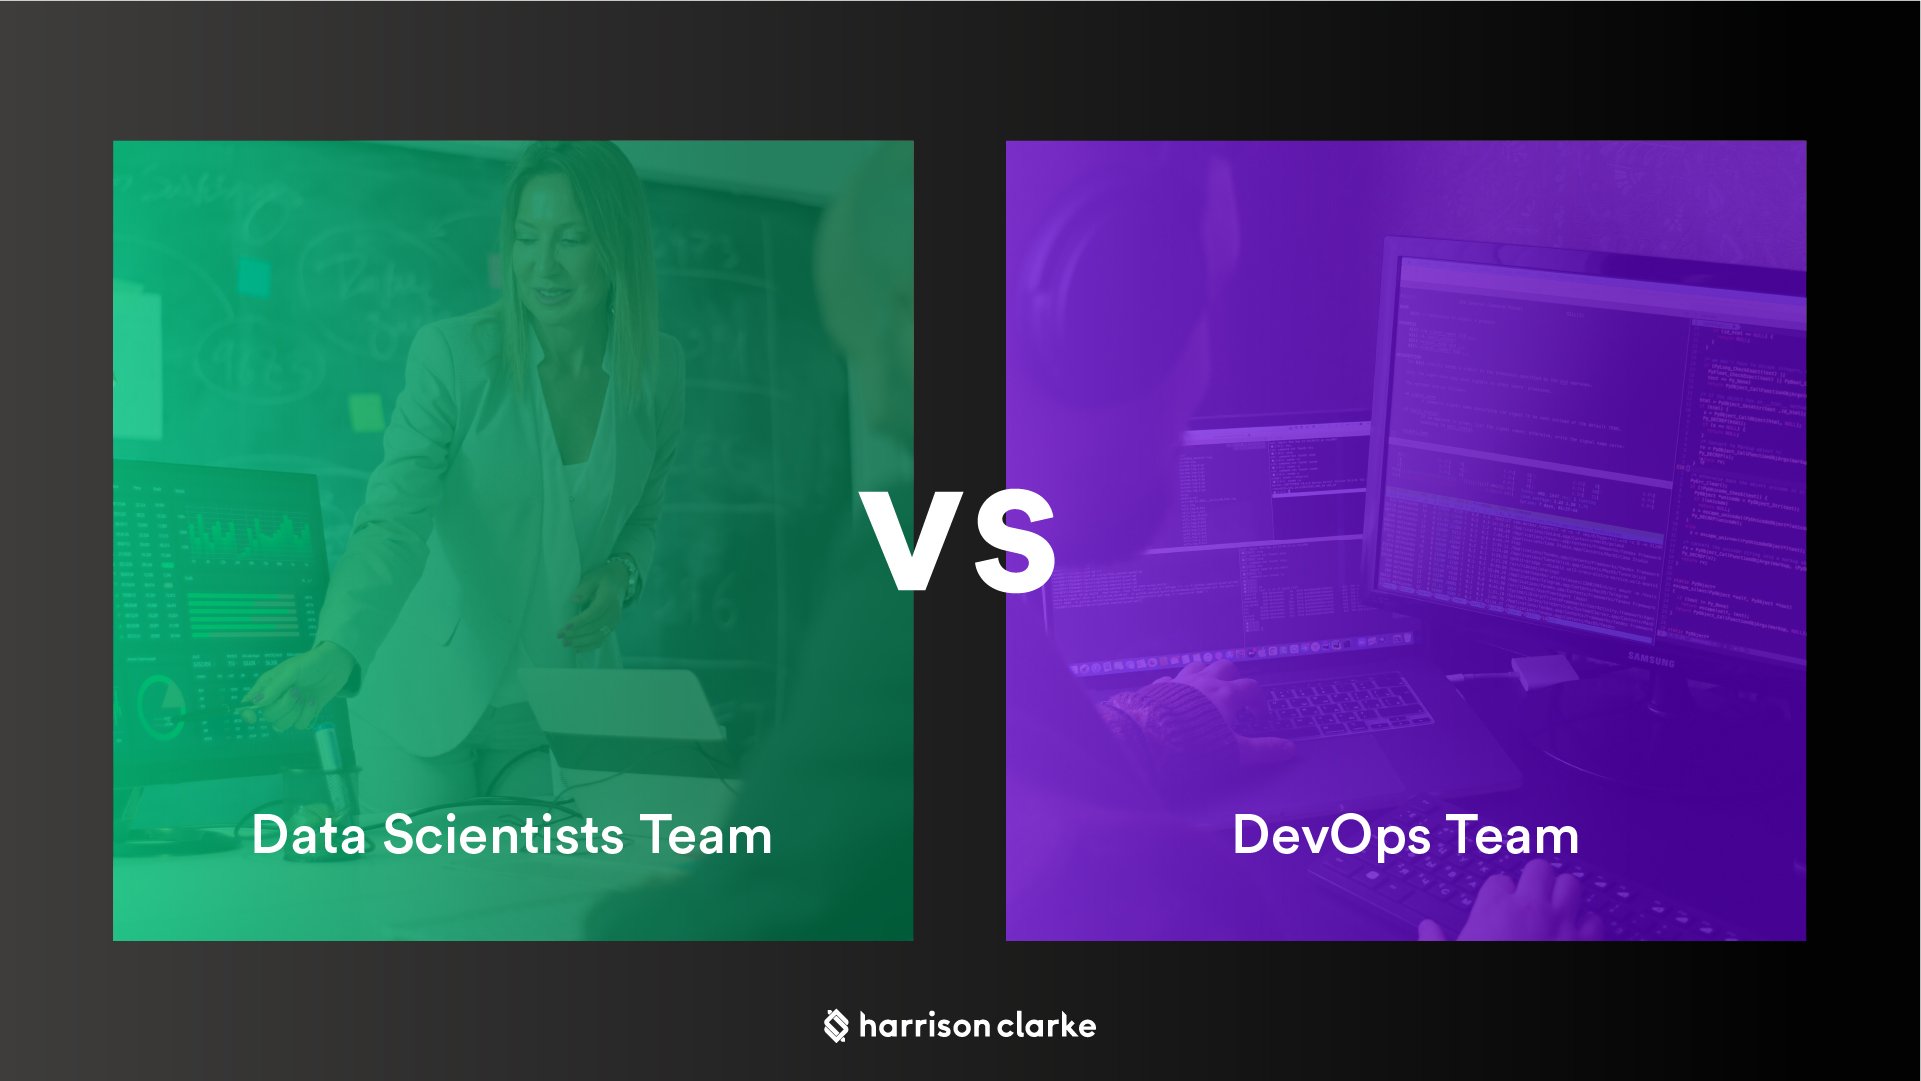 Data Scientists Team vs DevOps Team